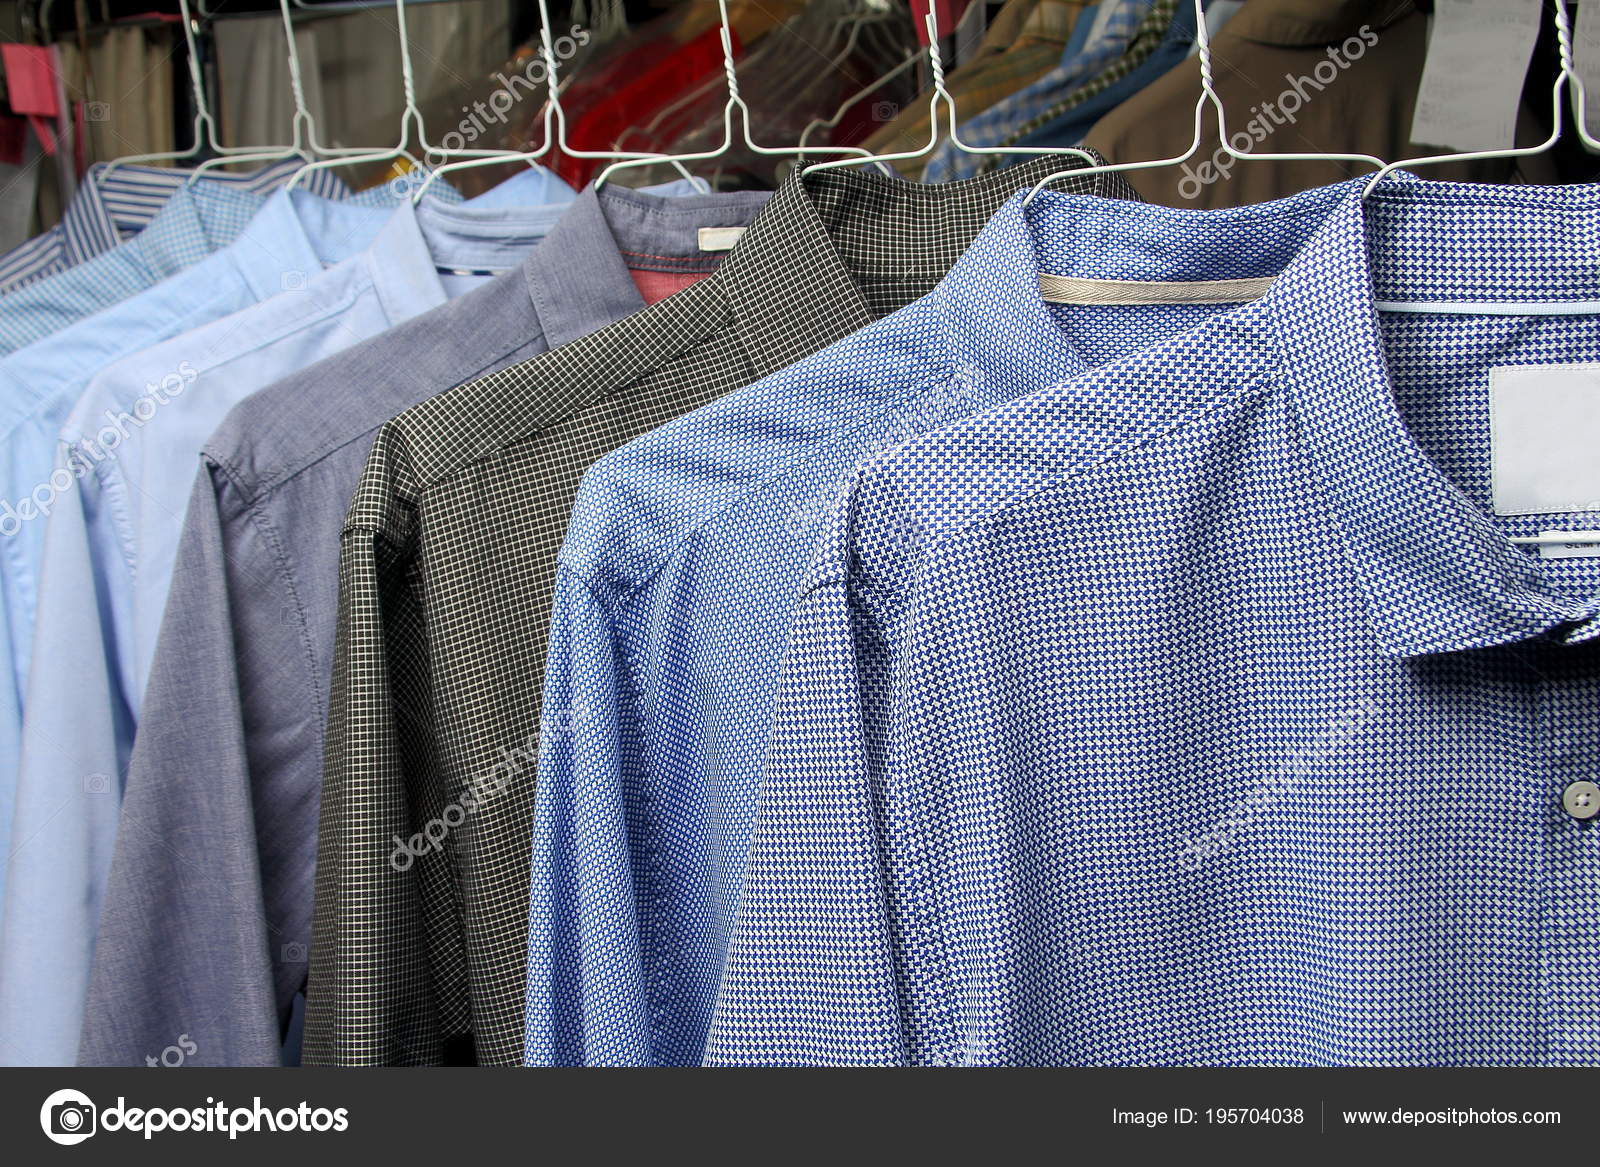 https://st3.depositphotos.com/3101027/19570/i/1600/depositphotos_195704038-stock-photo-ironed-shirts-dry-cleaning-hanger.jpg